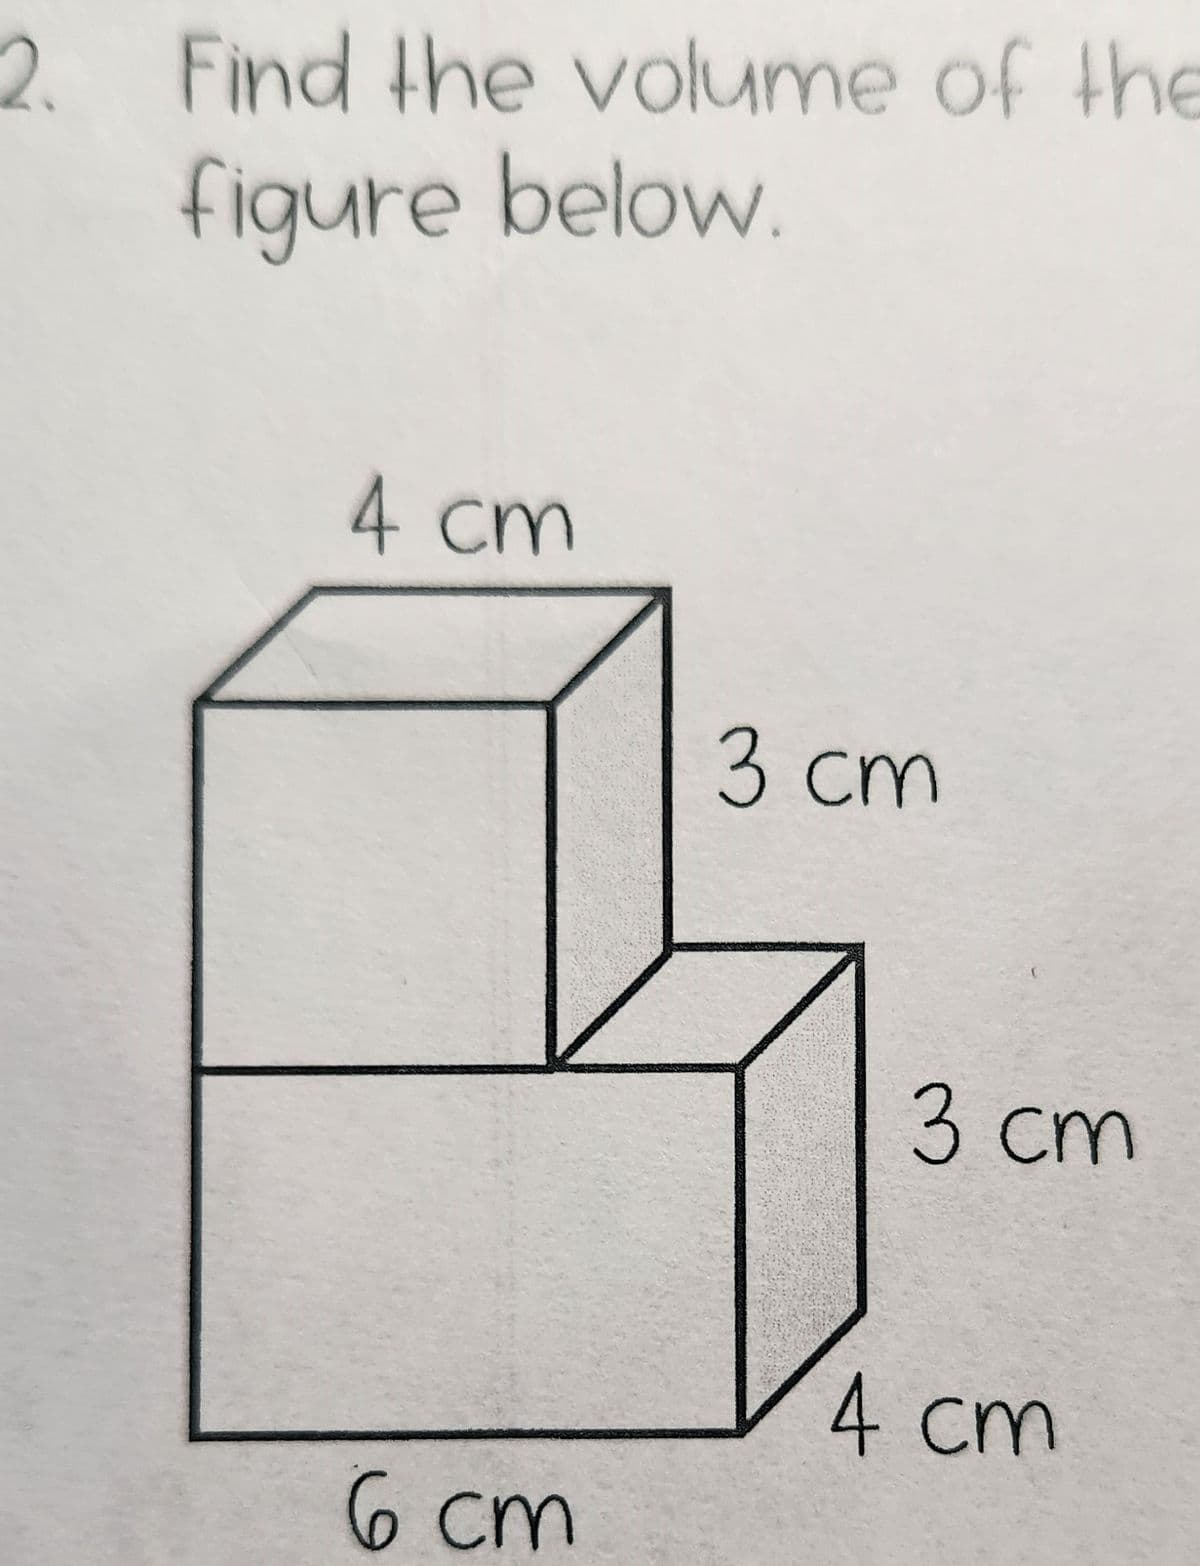 2. Find the volume of the
figure below.
4 cm
6 cm
3 cm
3 cm
4 cm